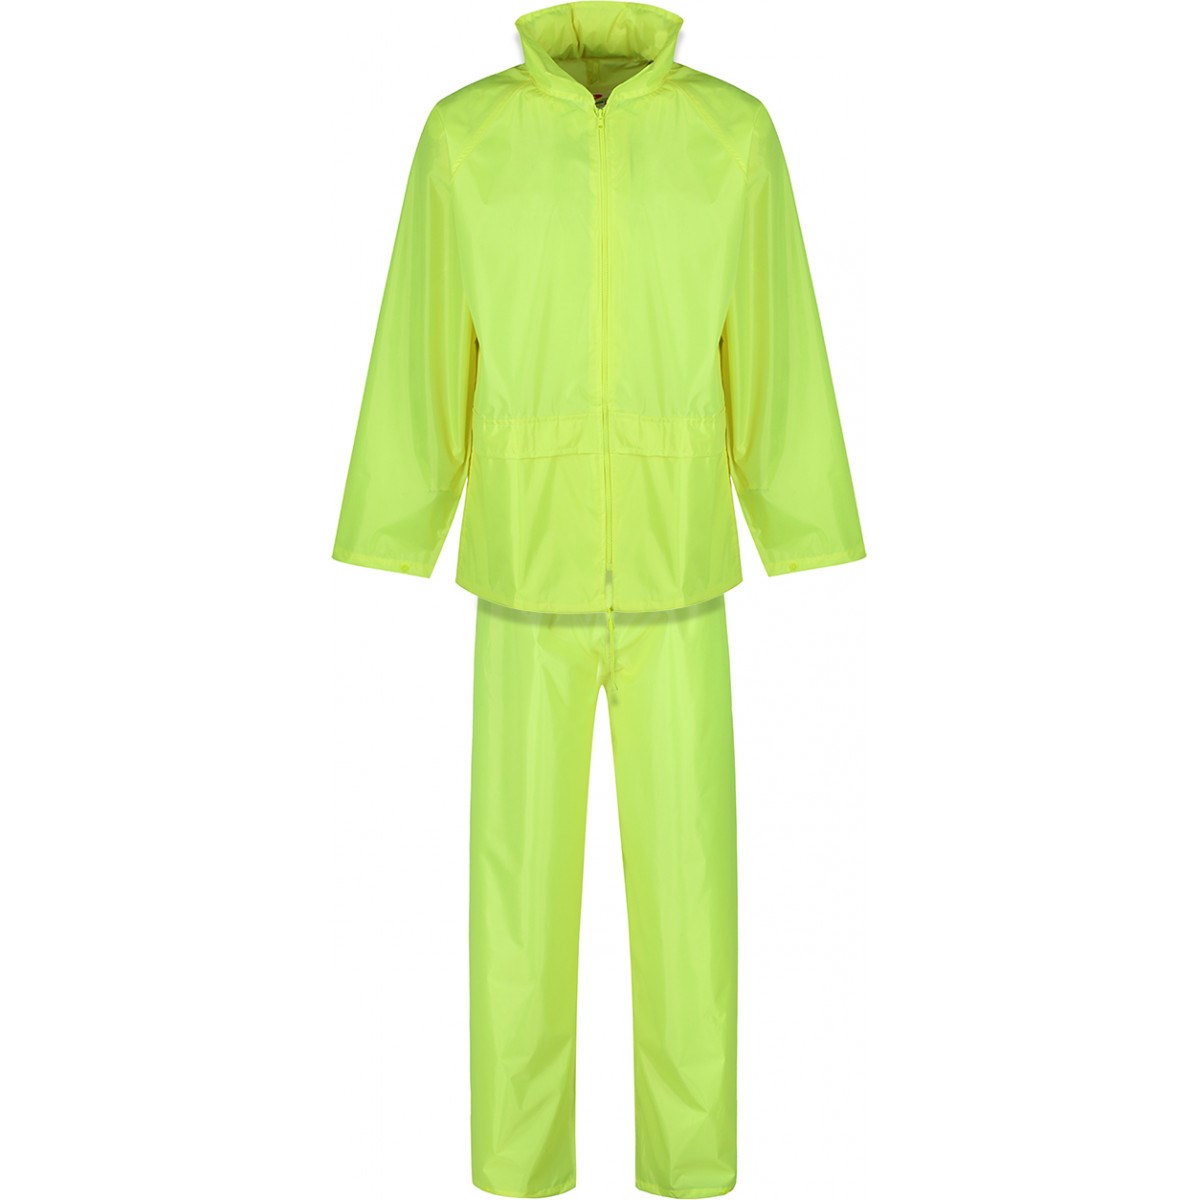 Supertouch Polyester PVC Rain Wear Rain Suit Jacket Trousers Set Lightweight New 